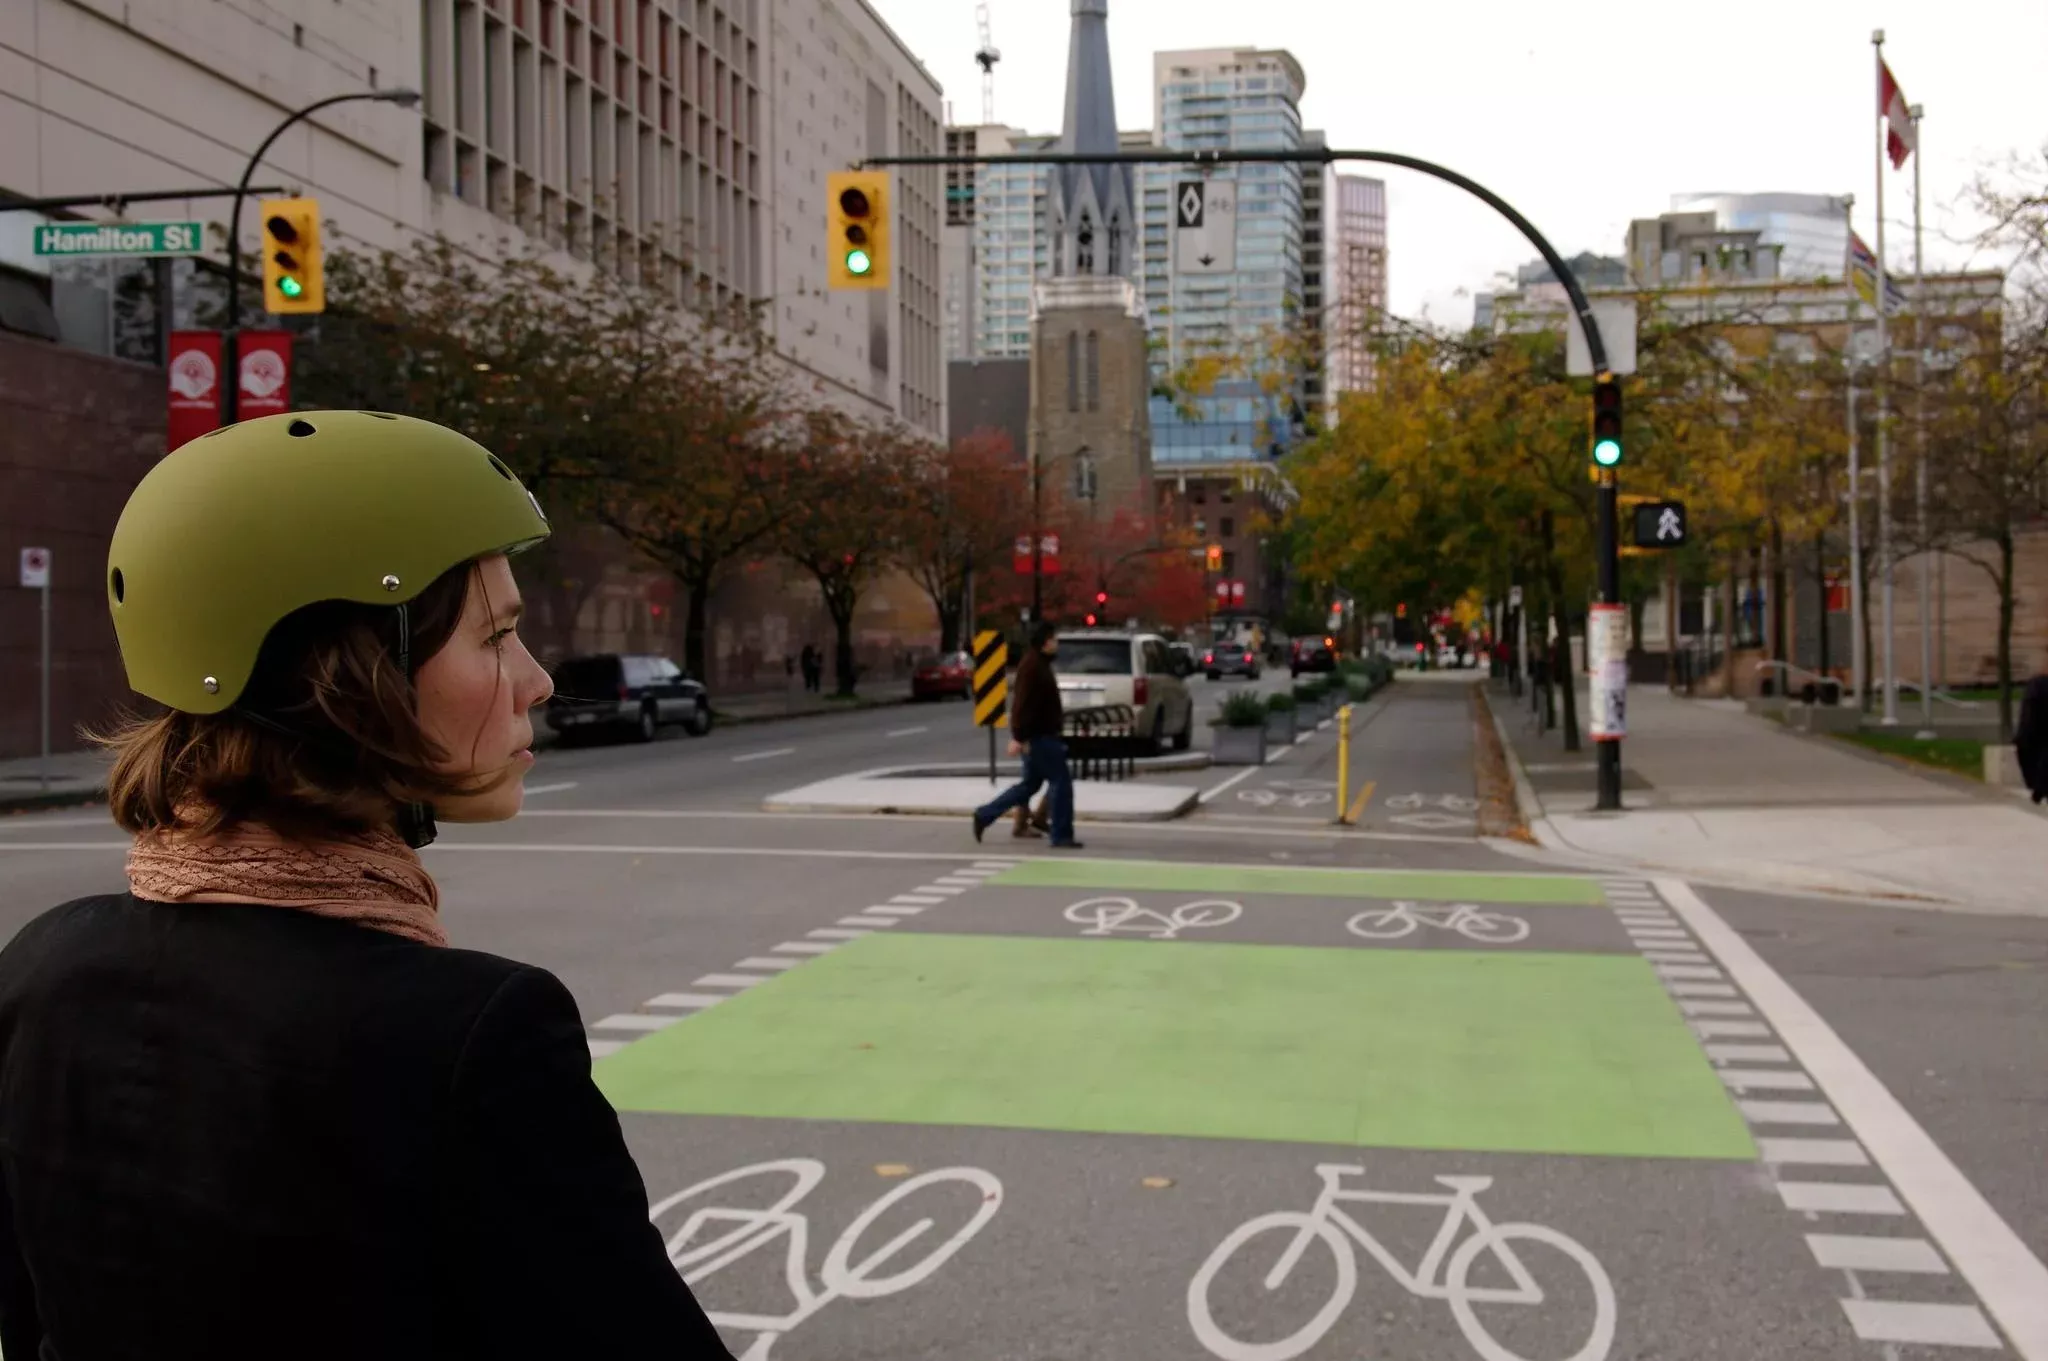 Mujer con casco en bicicleta mirando hacia carril de bicis